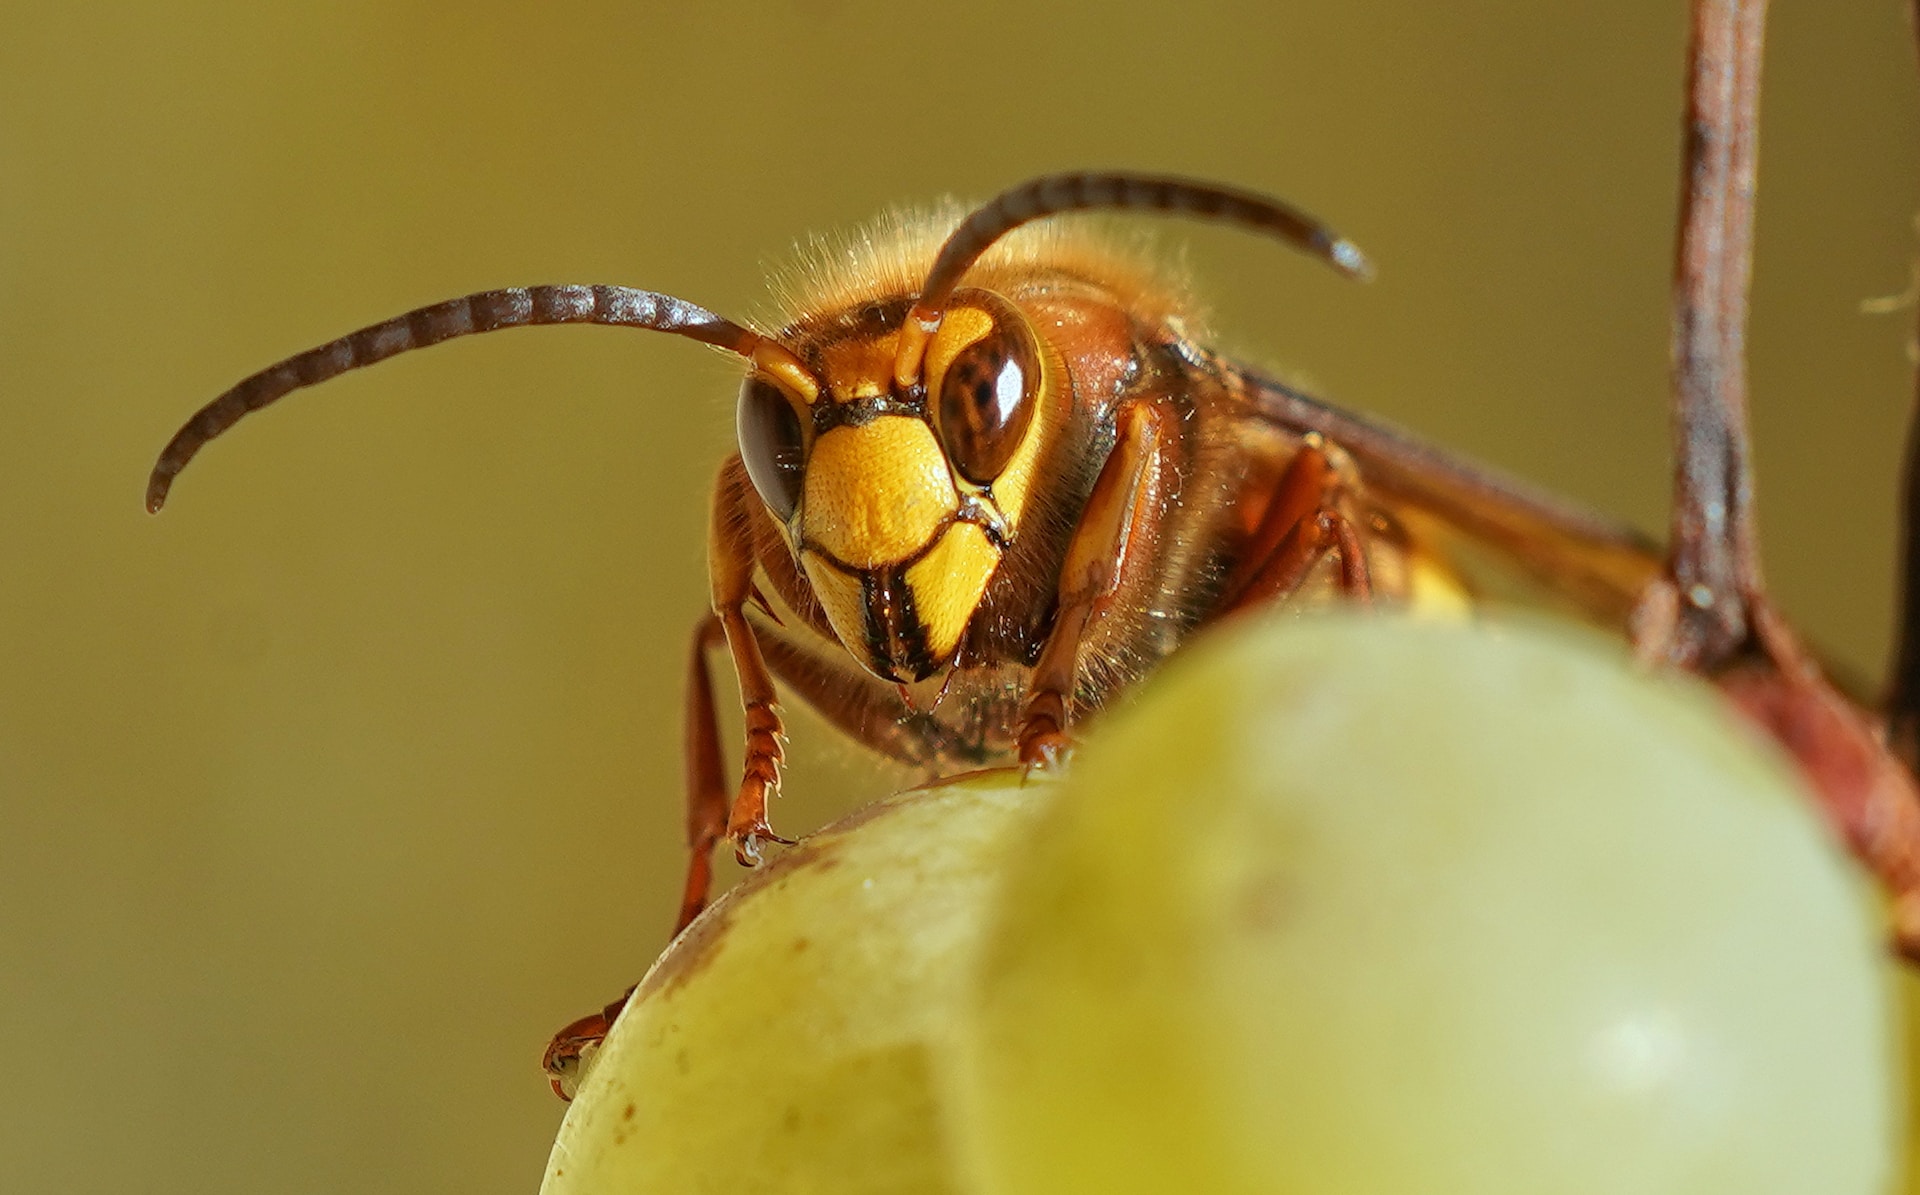 A hornet on a piece of fruit